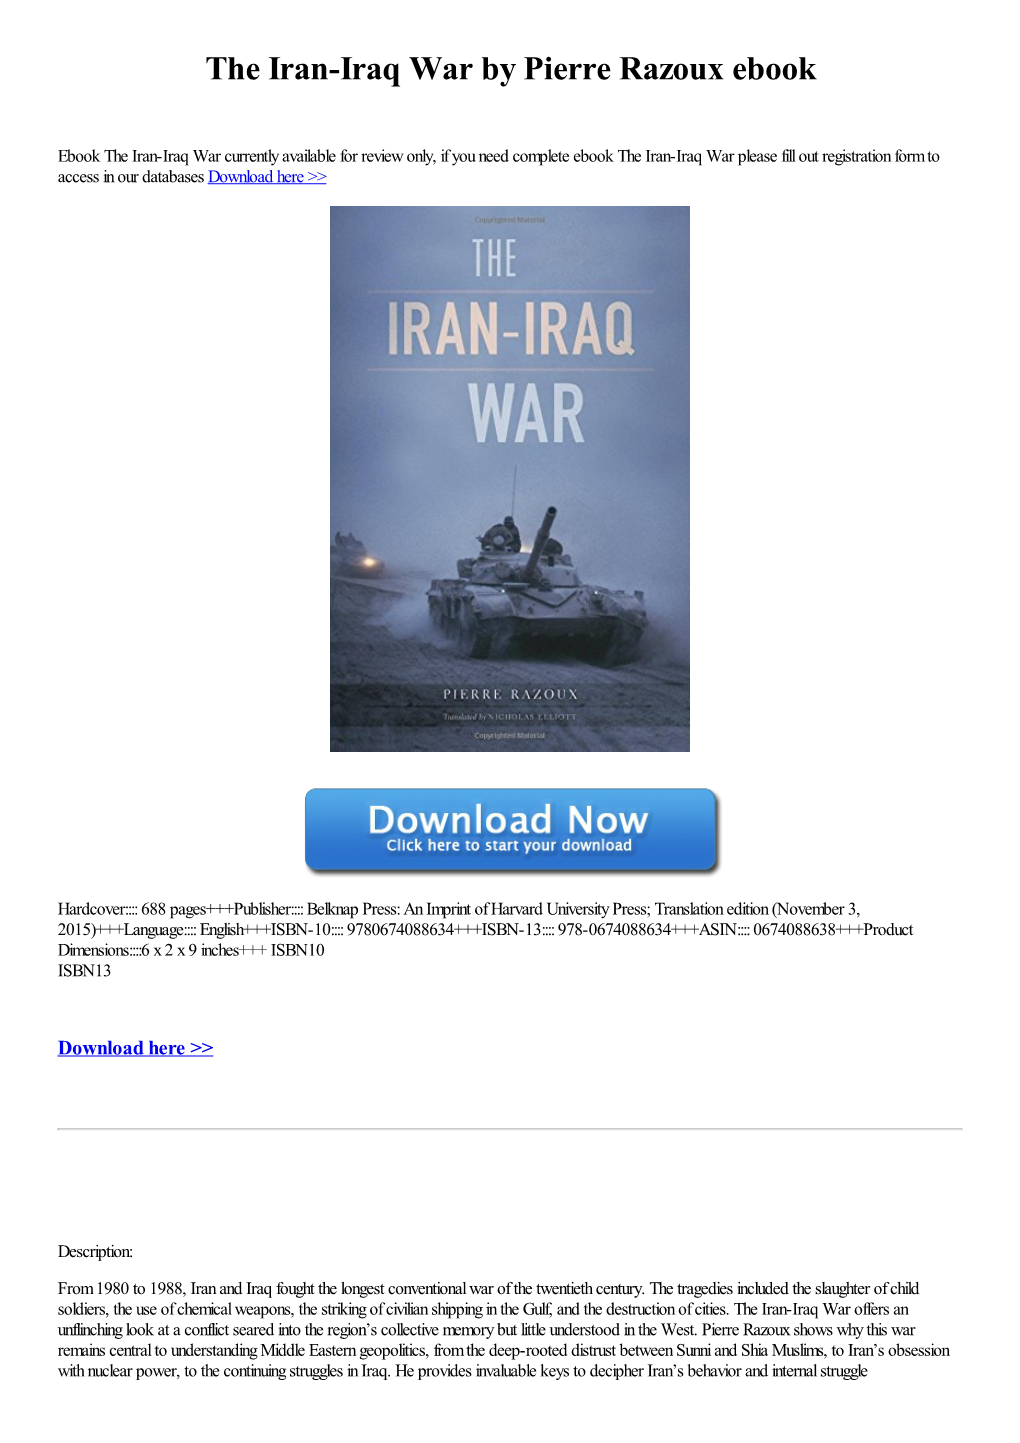 The Iran-Iraq War by Pierre Razoux Ebook